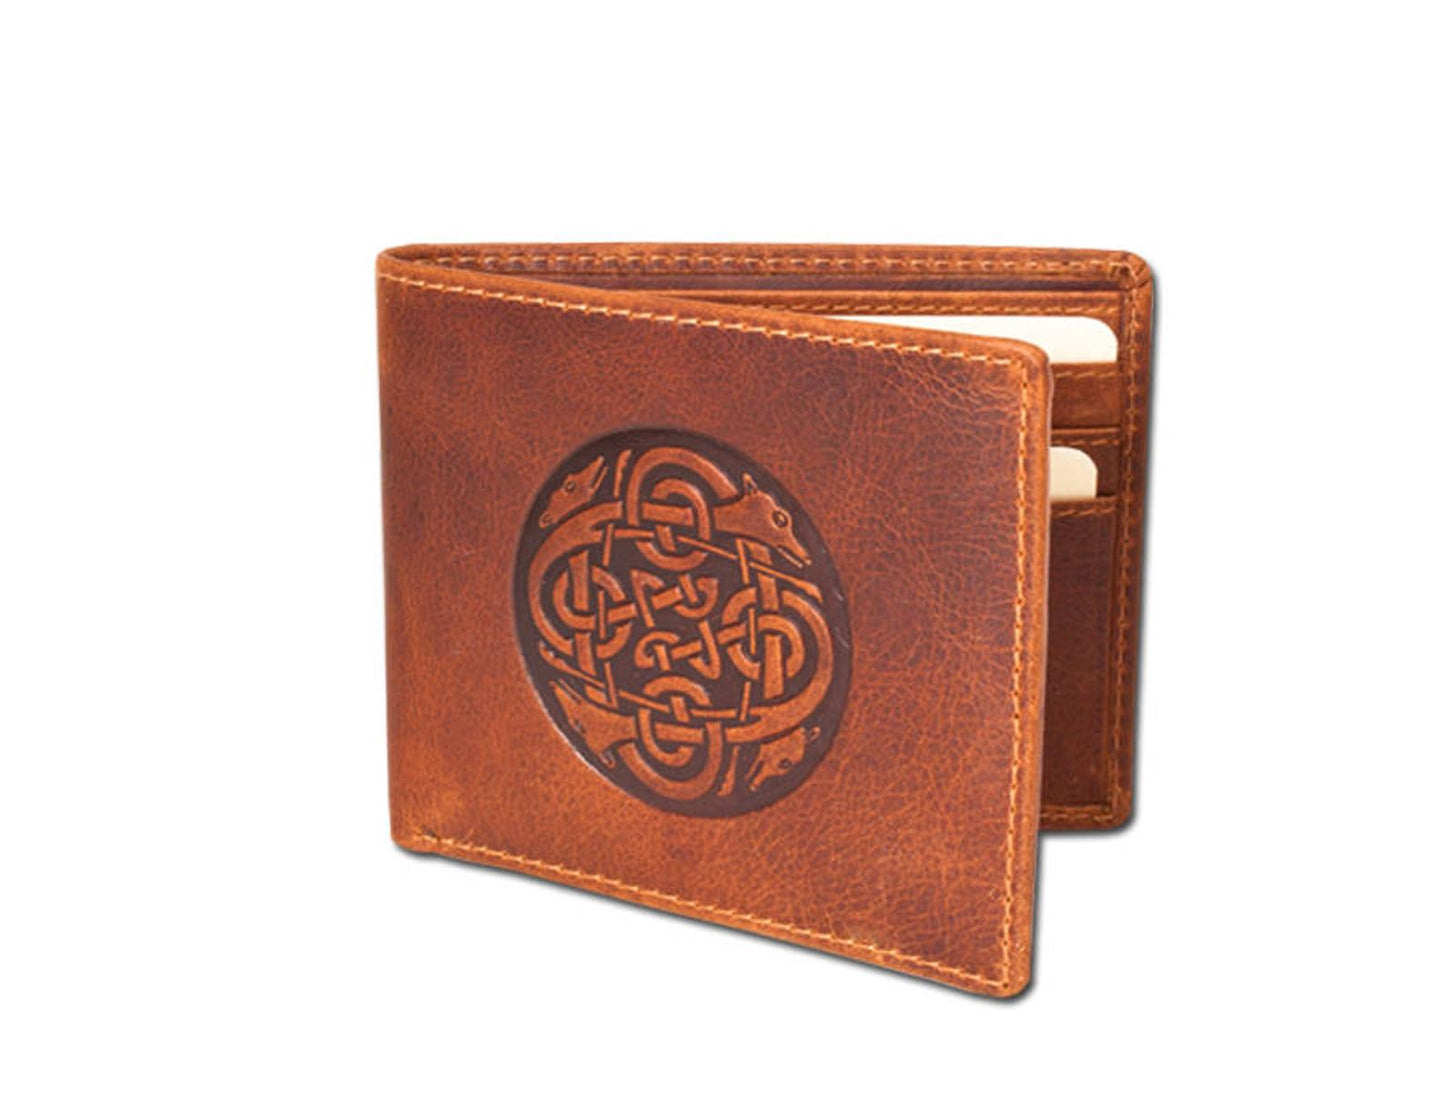 Cuchulainn leather bi fold wallet tan